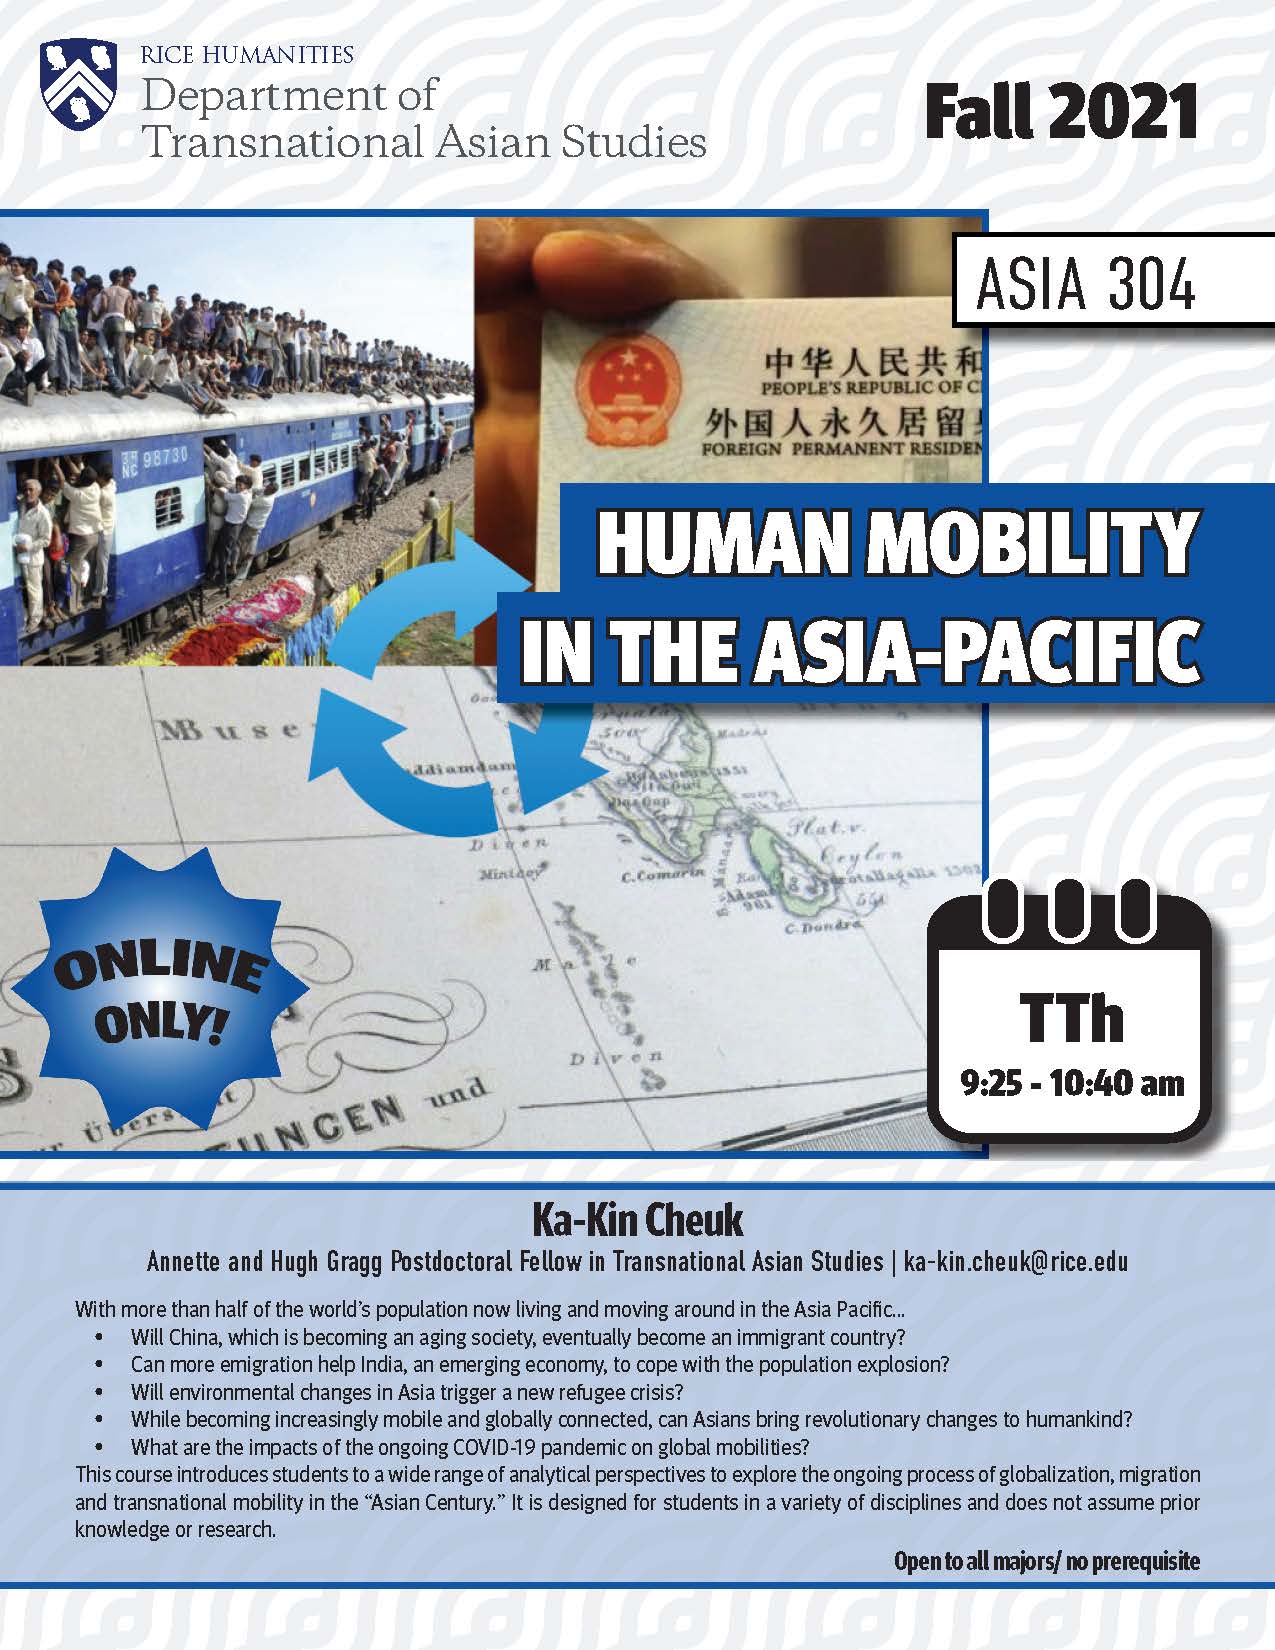 ASIA 304 course flyer